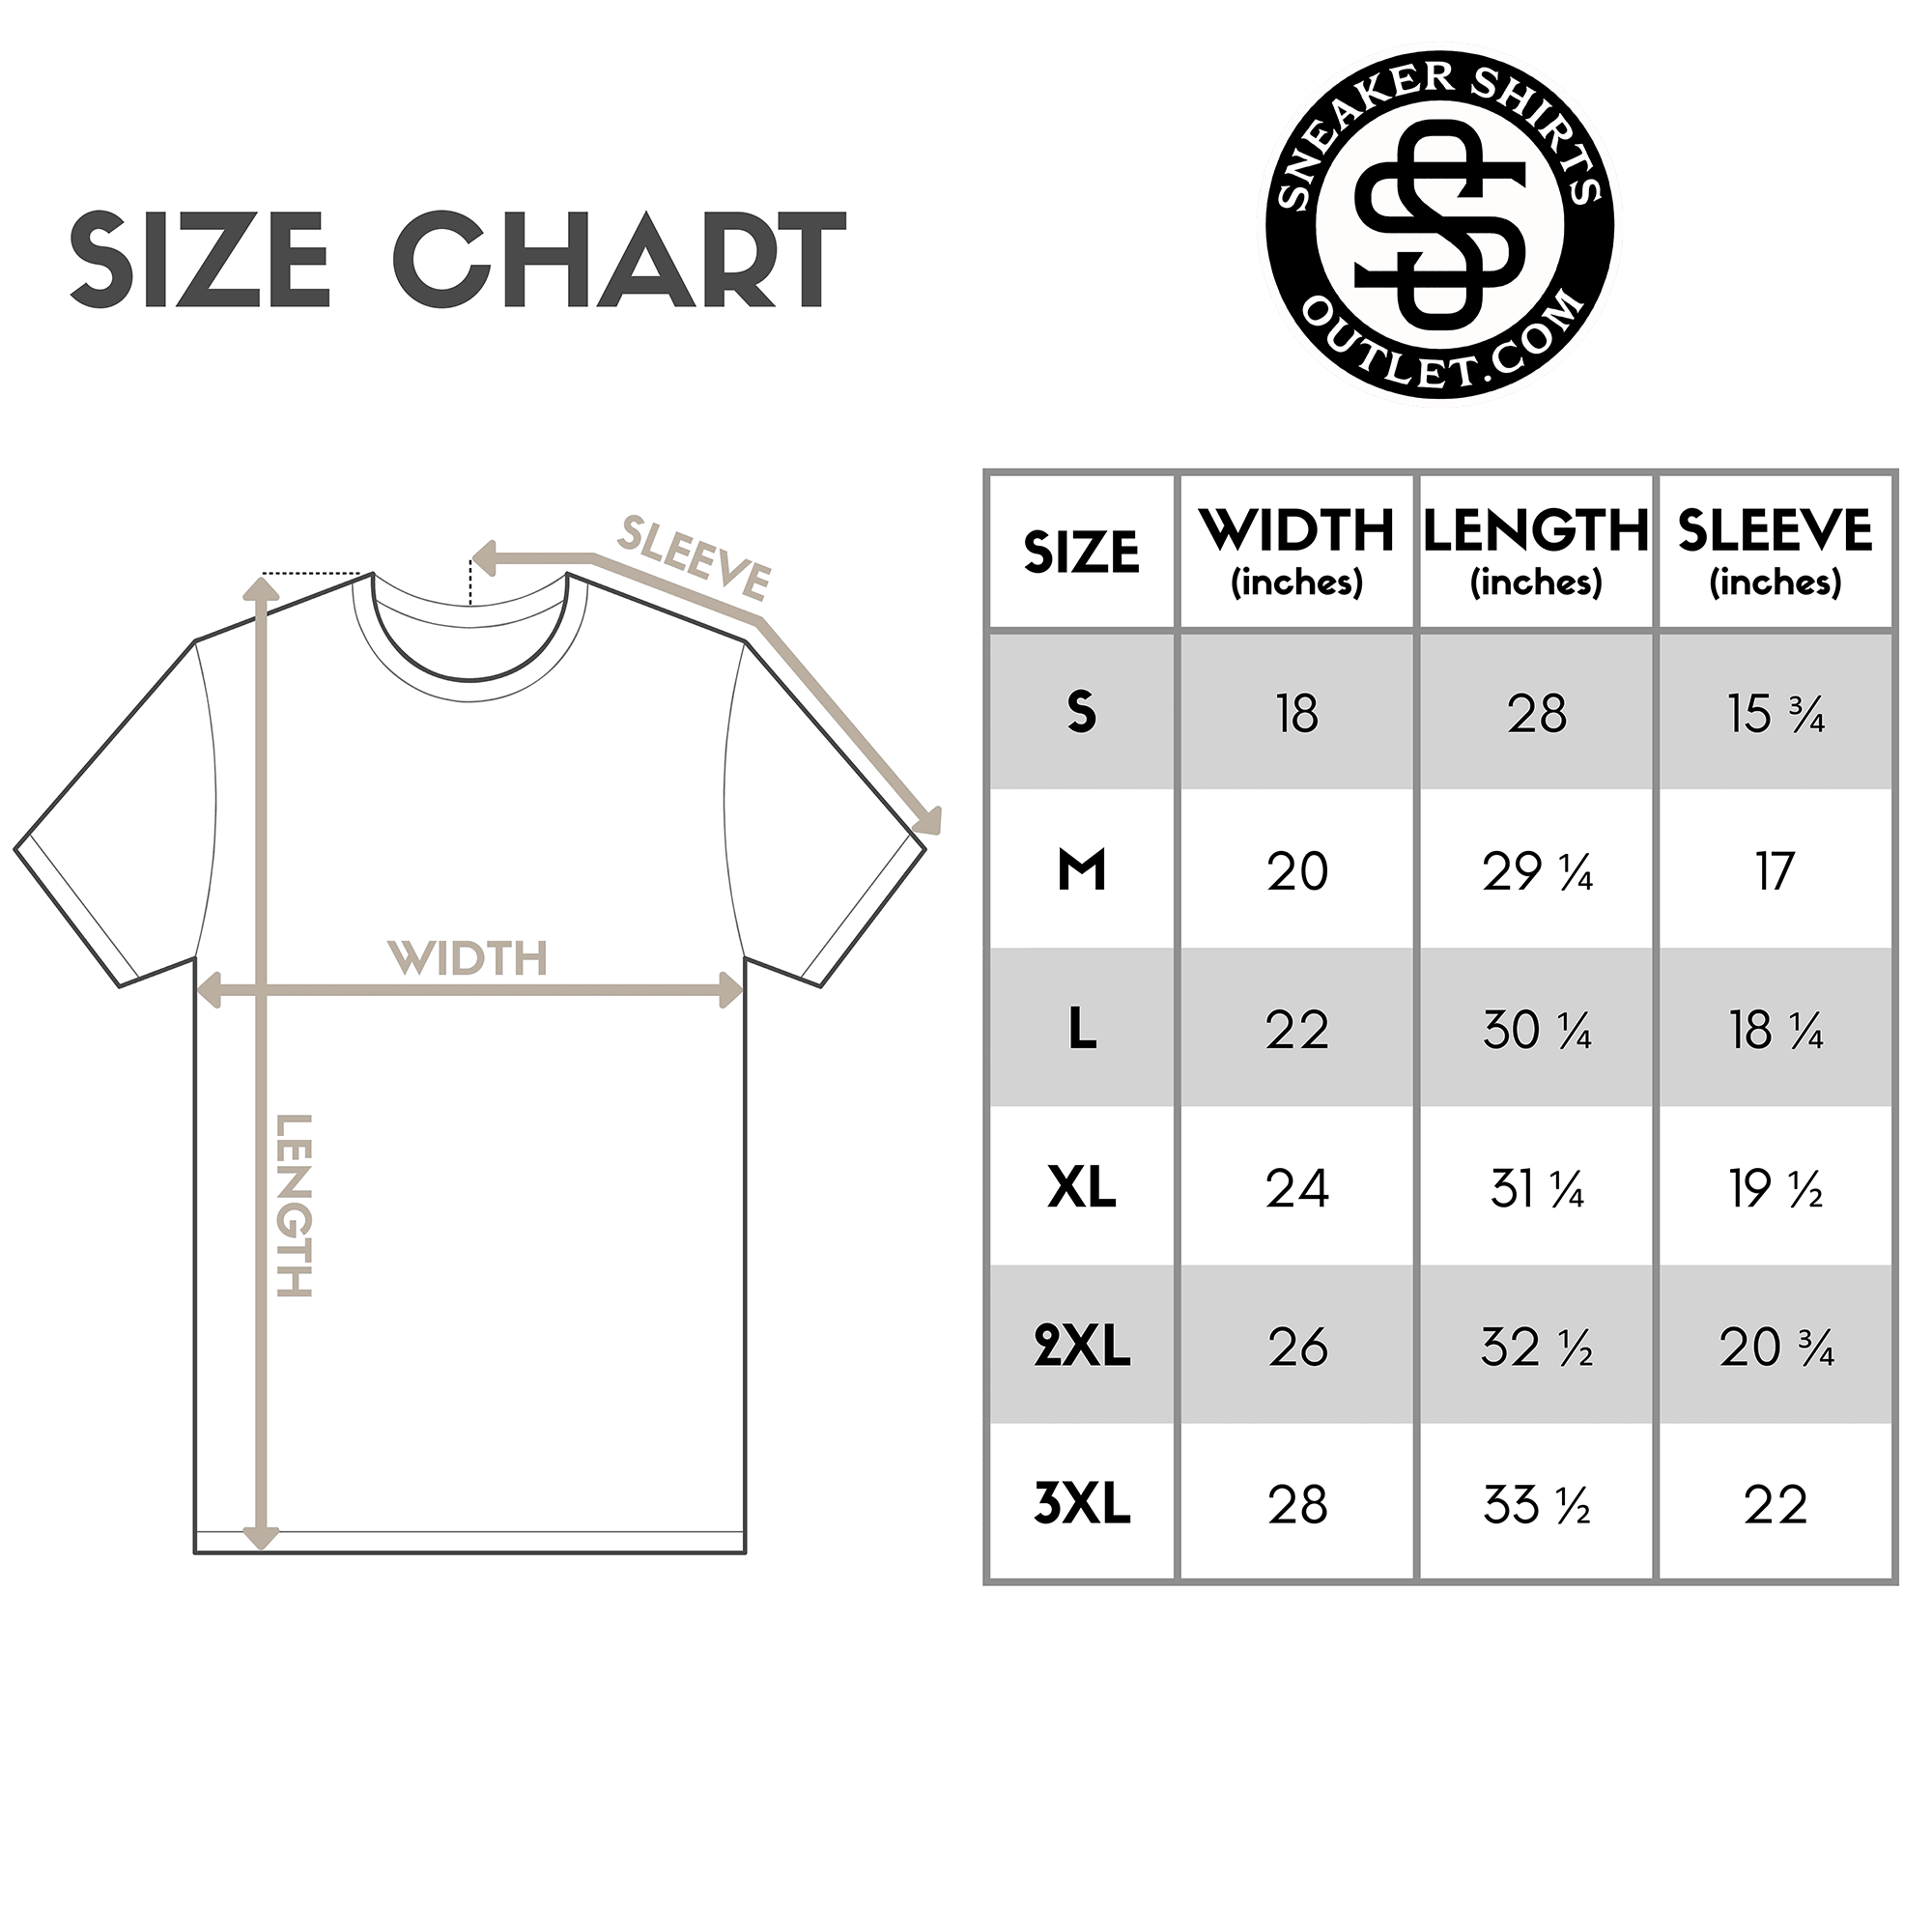 Sagittarius Shirt size chart photo